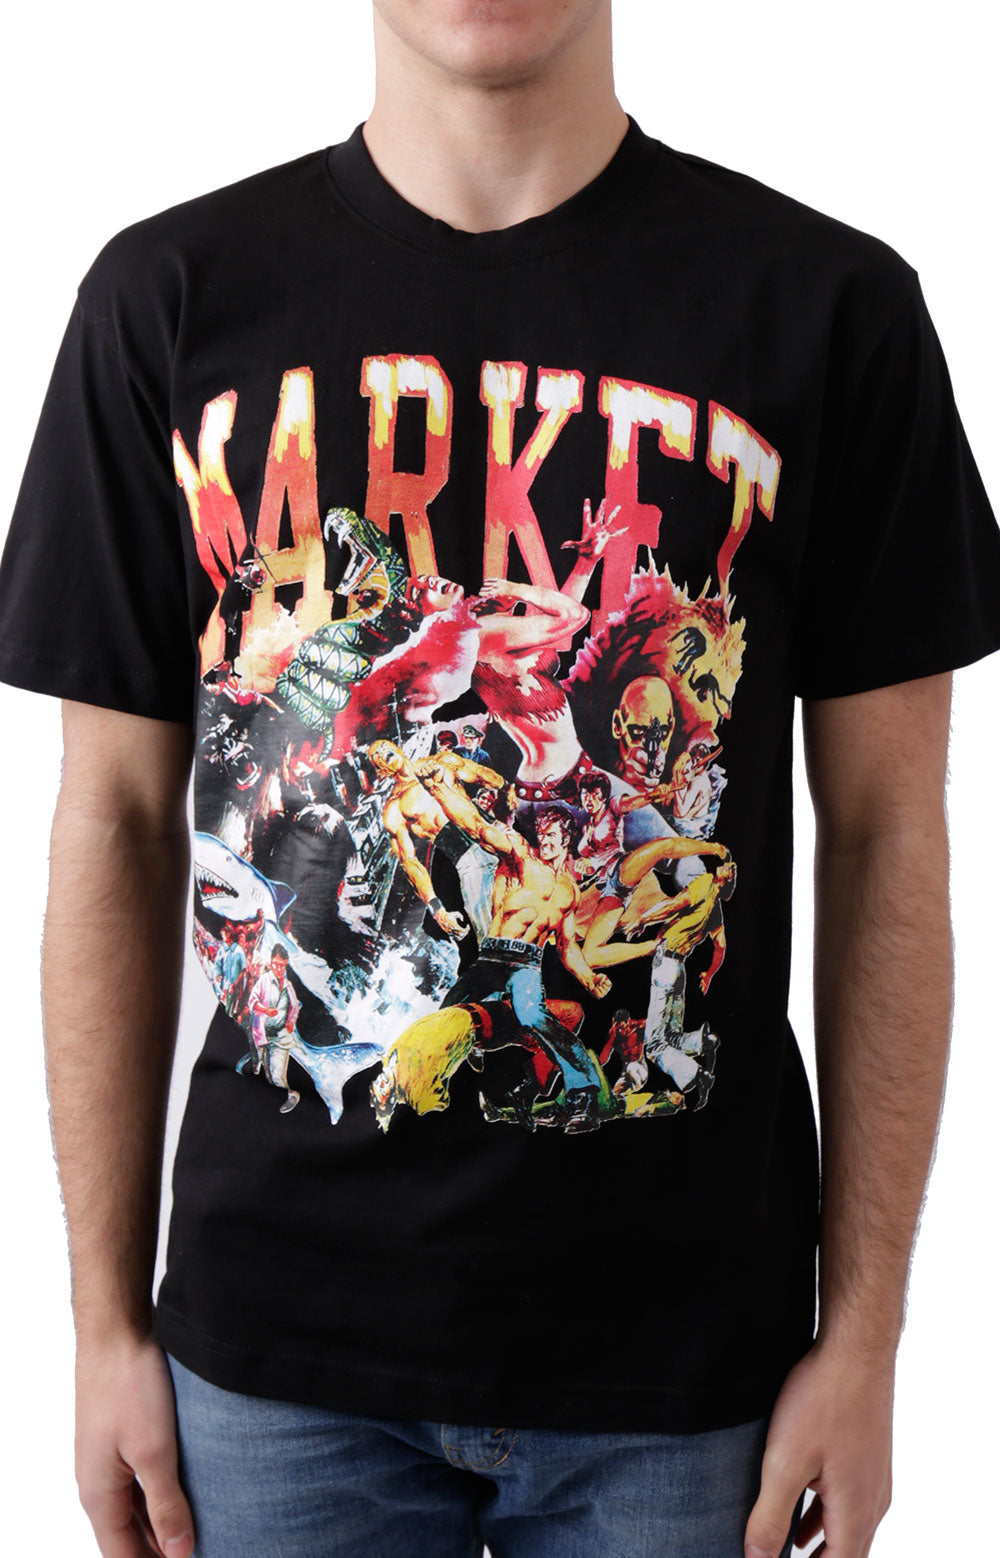 Market Arc Animal Mosh Pit T-Shirt - Black